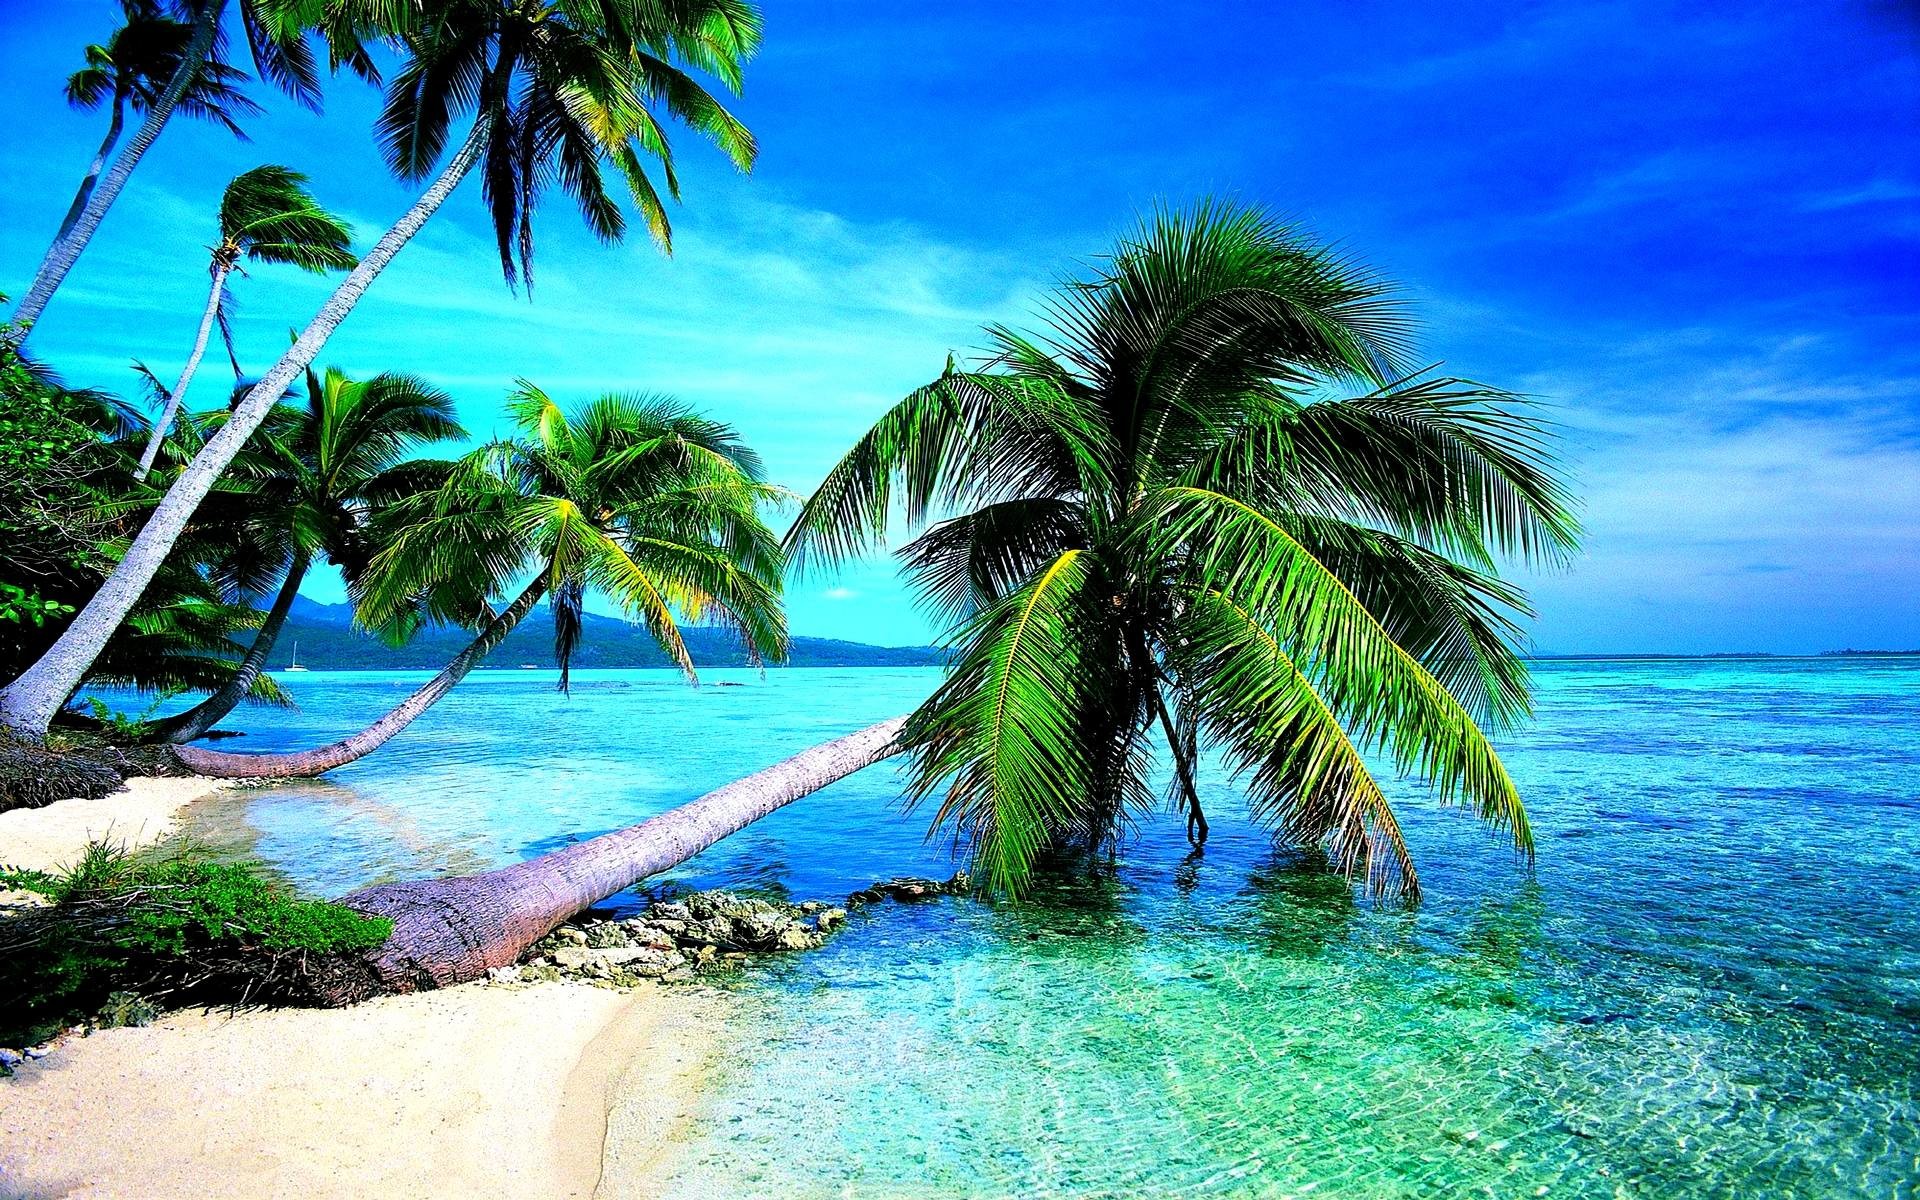 Image – Download tropical beach wallpaper hd desktop